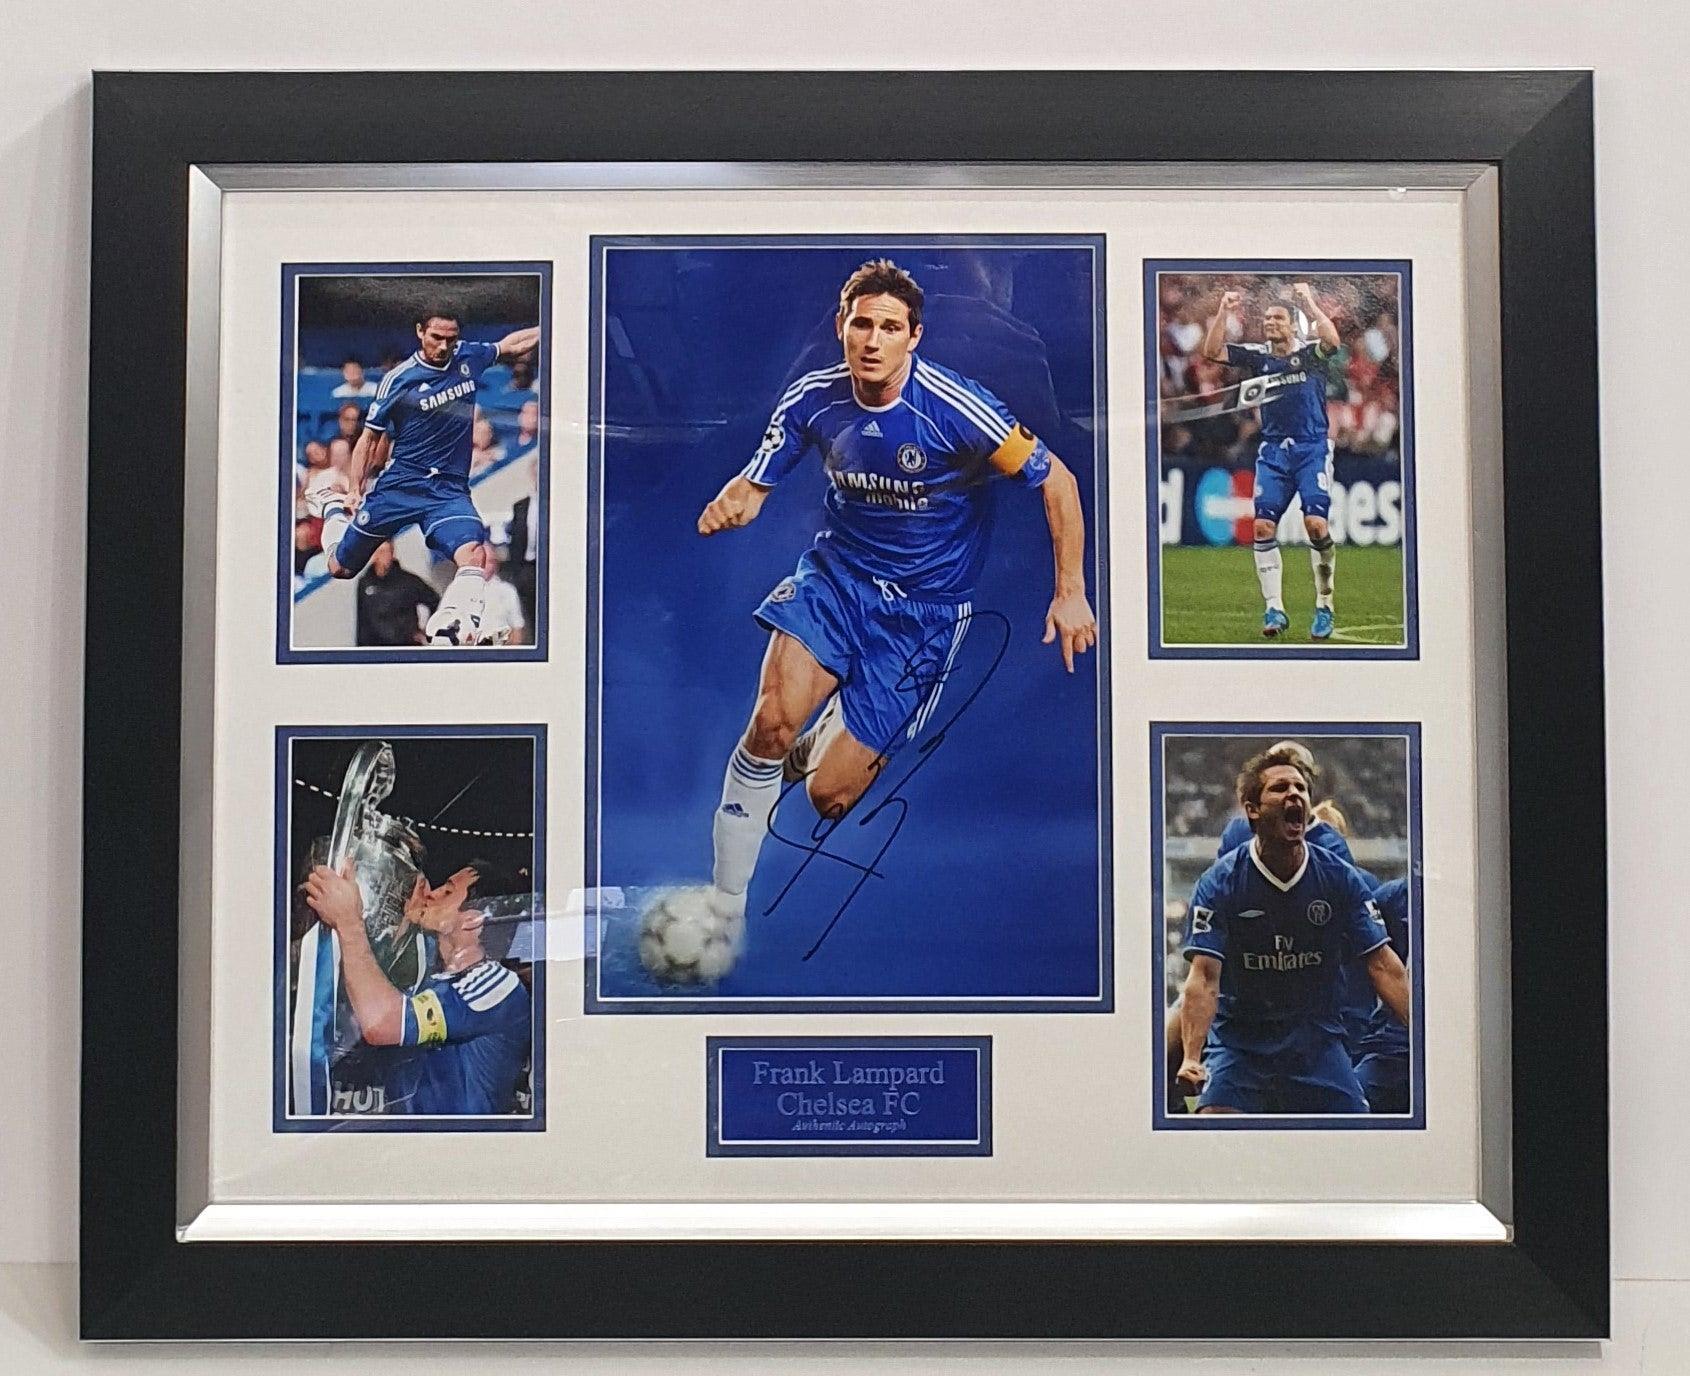 Authentic Chelsea Signed Memorabilia - Darling Picture Framing